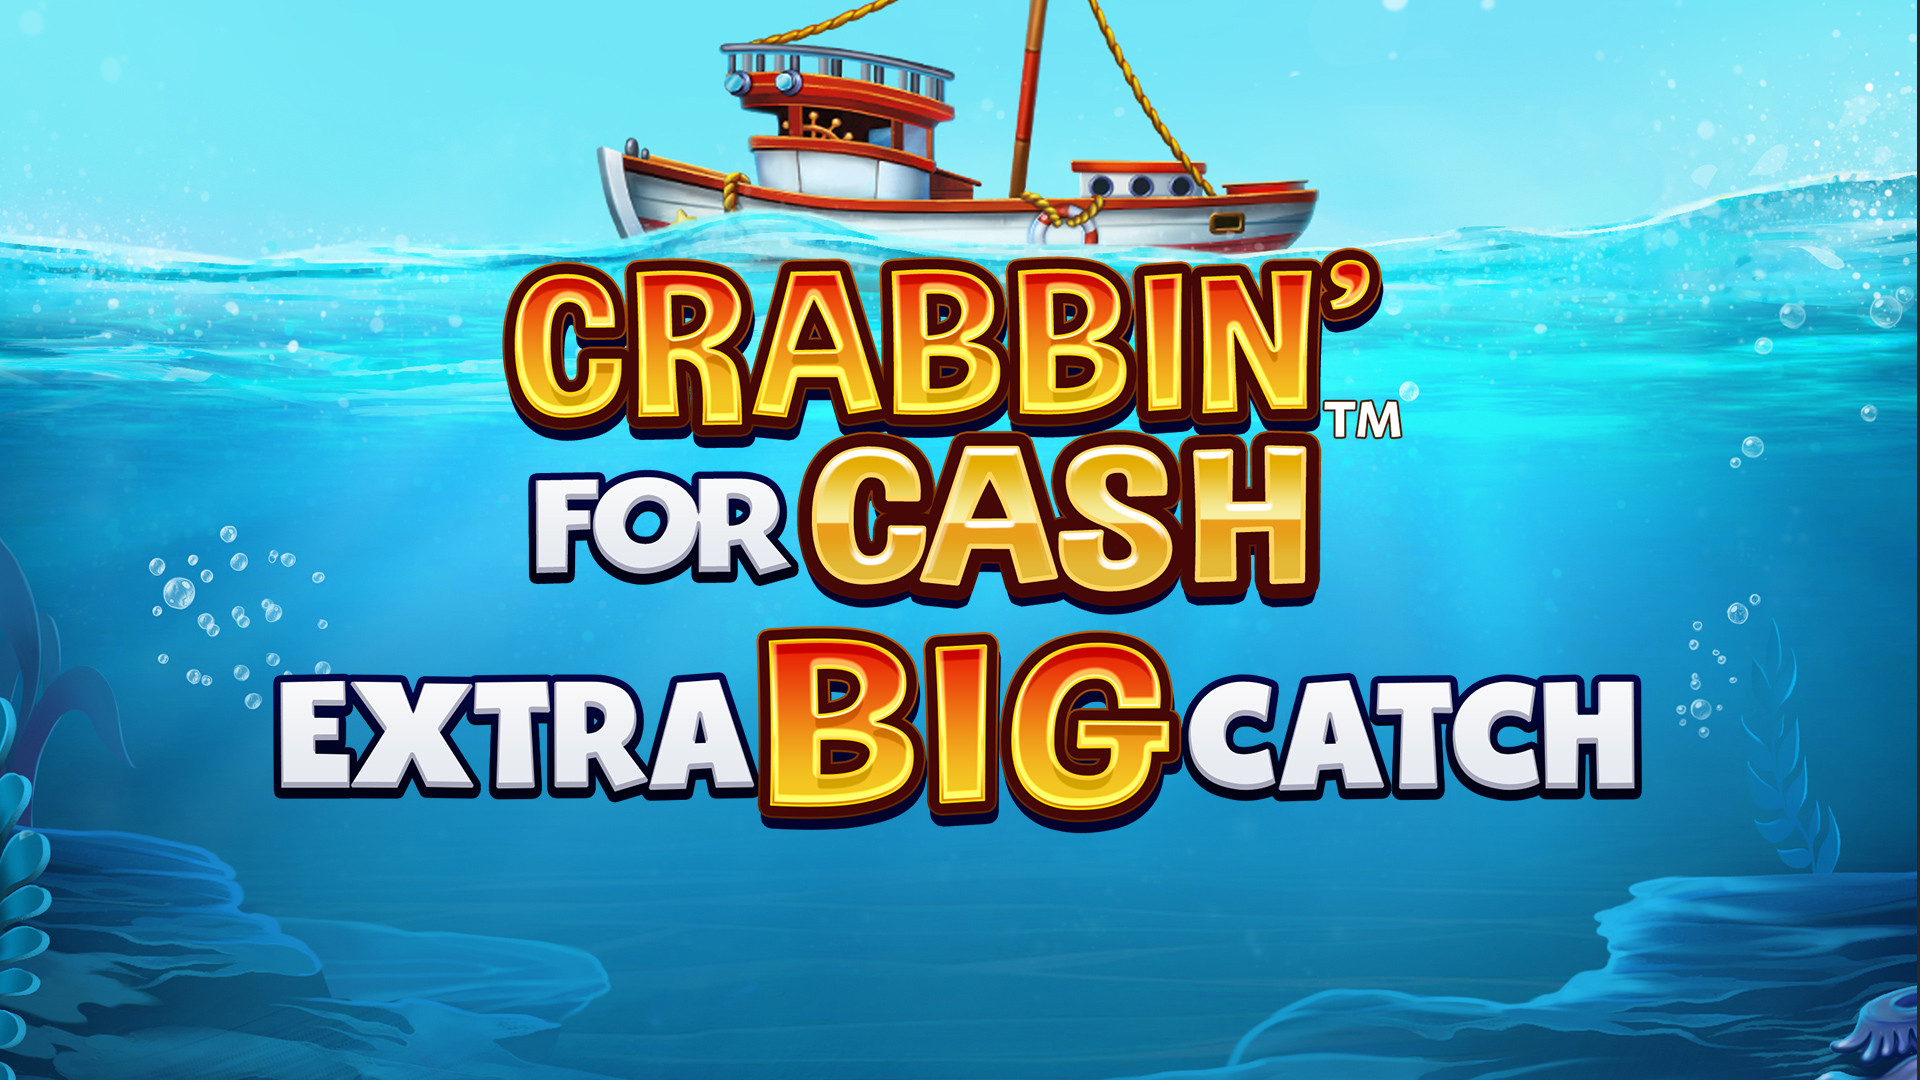 Crabbin' for Cash Extra Big Catch